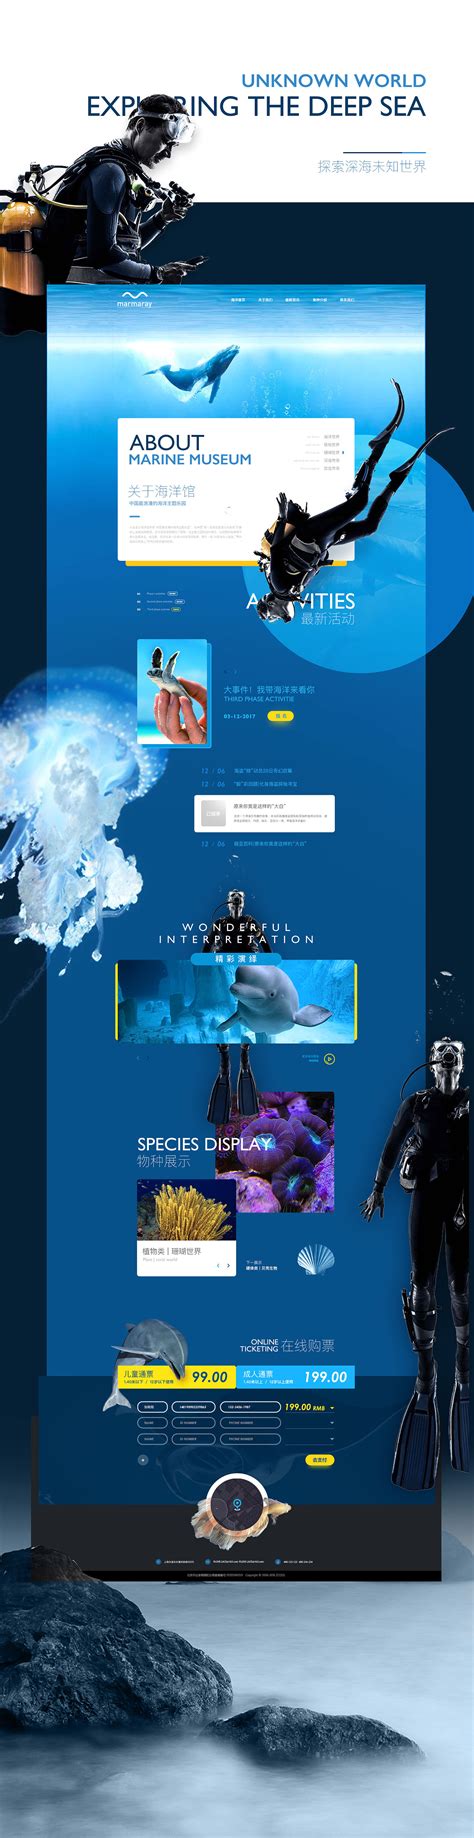 「MEOW」-水族馆海洋馆企业站网页设计-好想去看海～|website|corporation homepage|琥珀龙猫_Original ...